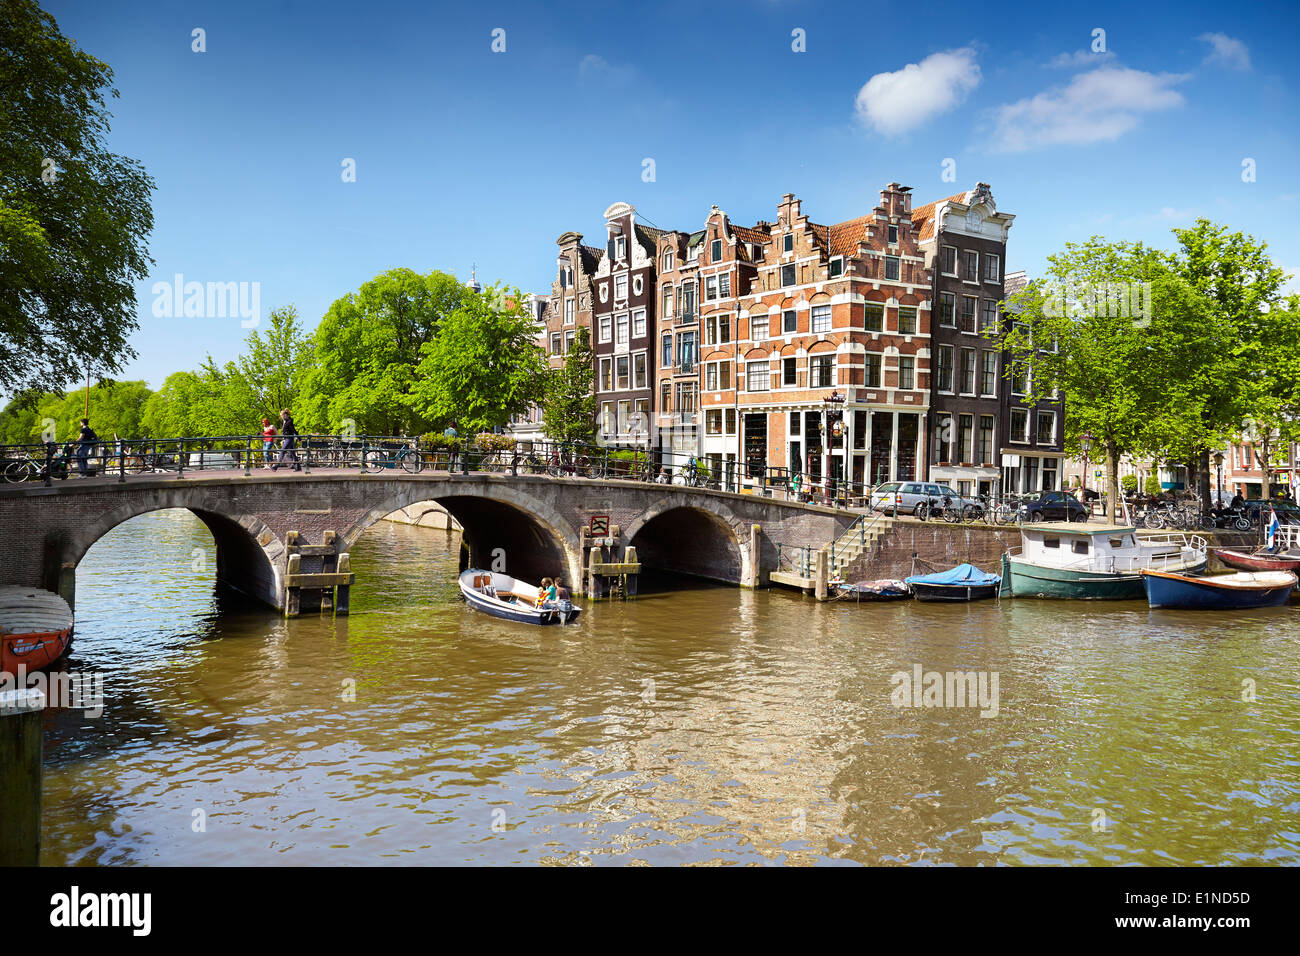 Amsterdam canal - Holland Netherlands Stock Photo